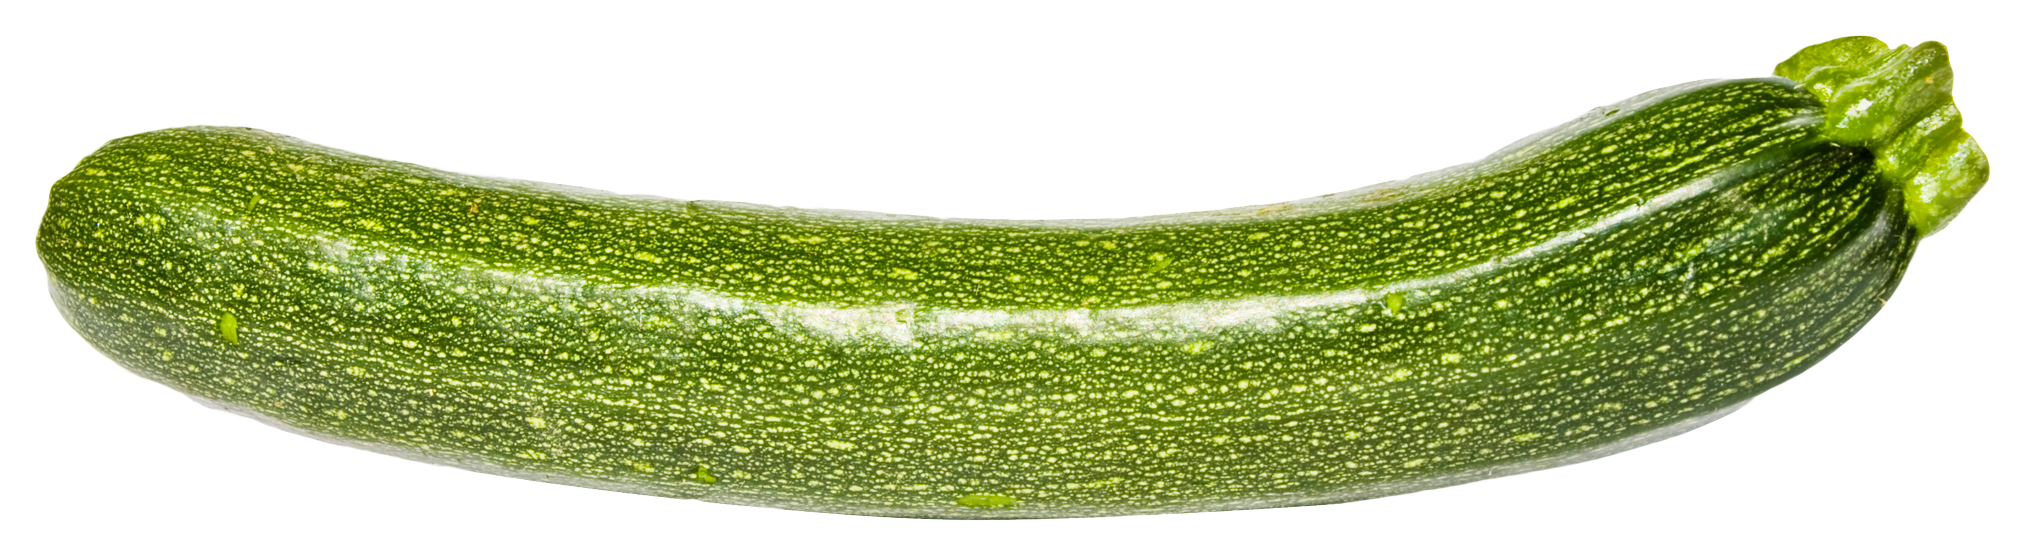 zucchini clipart zucchini plant